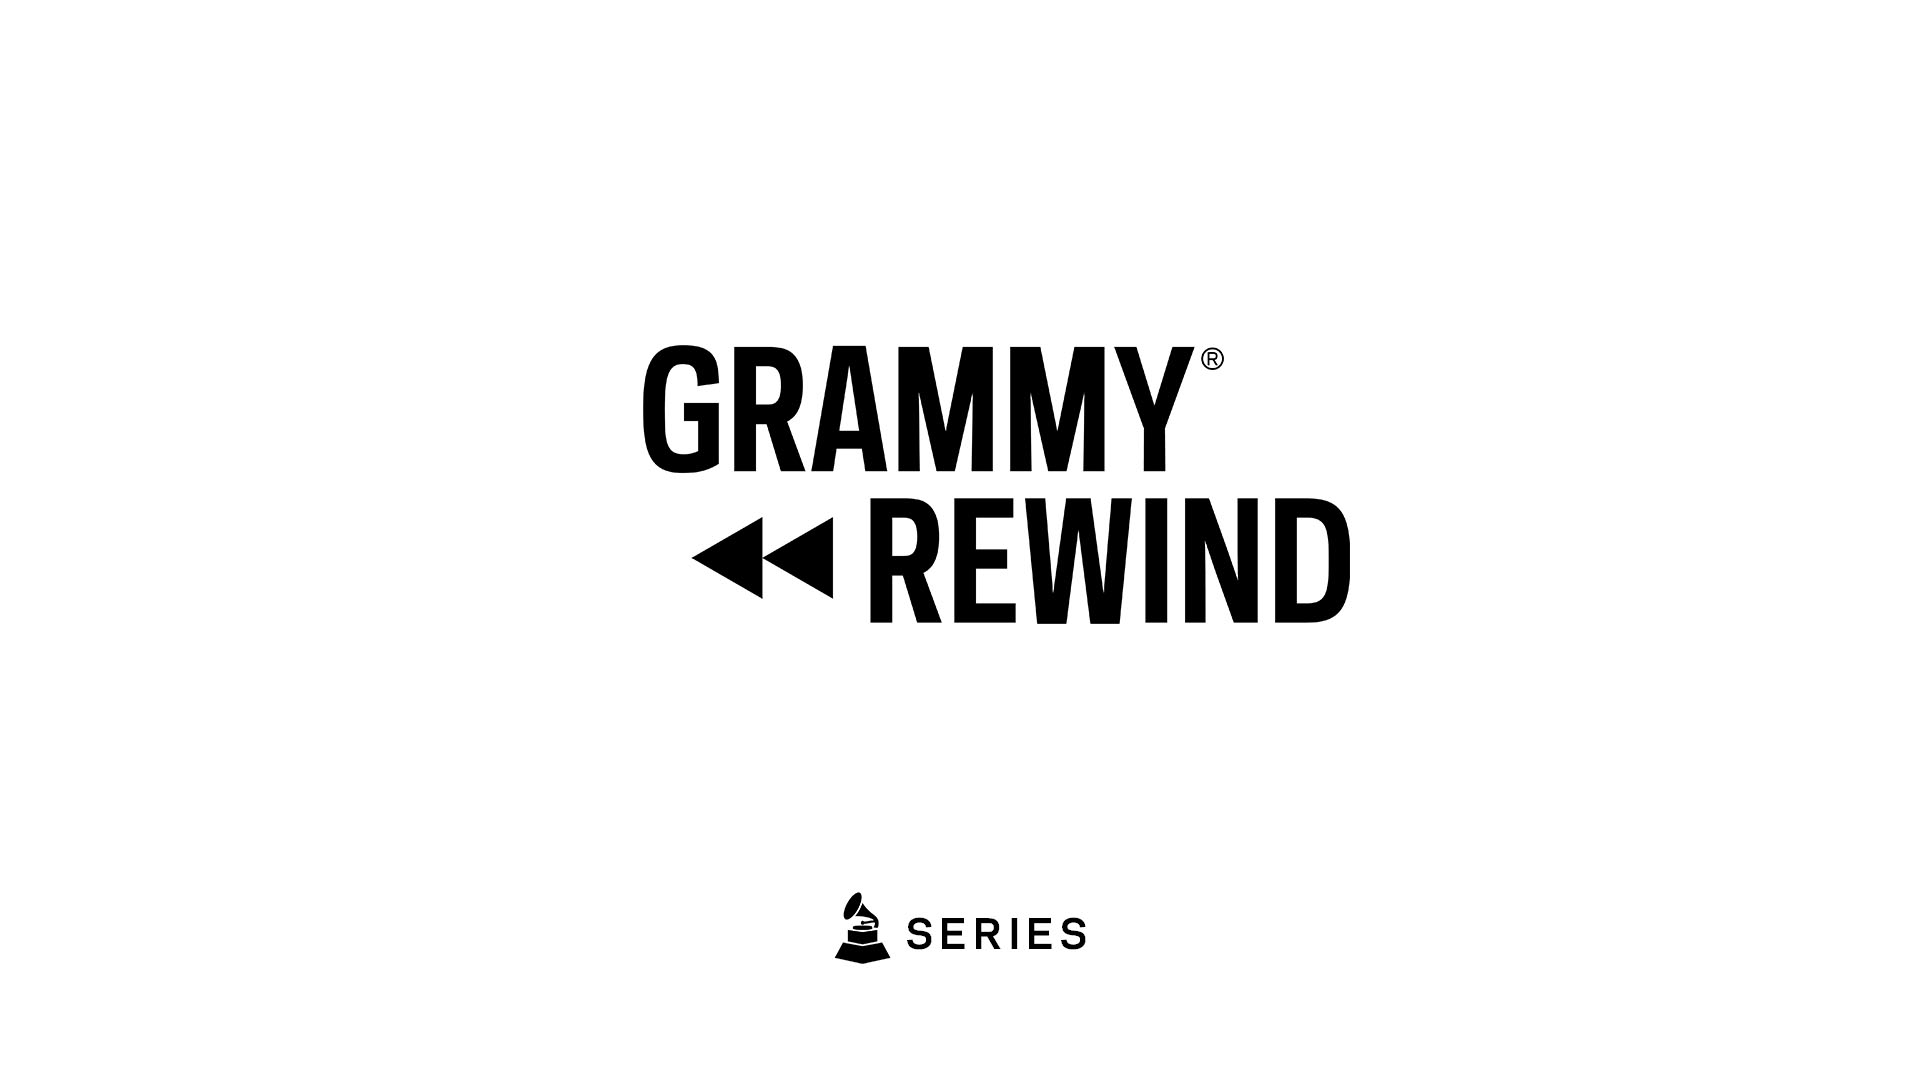 Watch Dua Lipa Win Best New Artist At The 61st GRAMMY Awards | GRAMMY Rewind